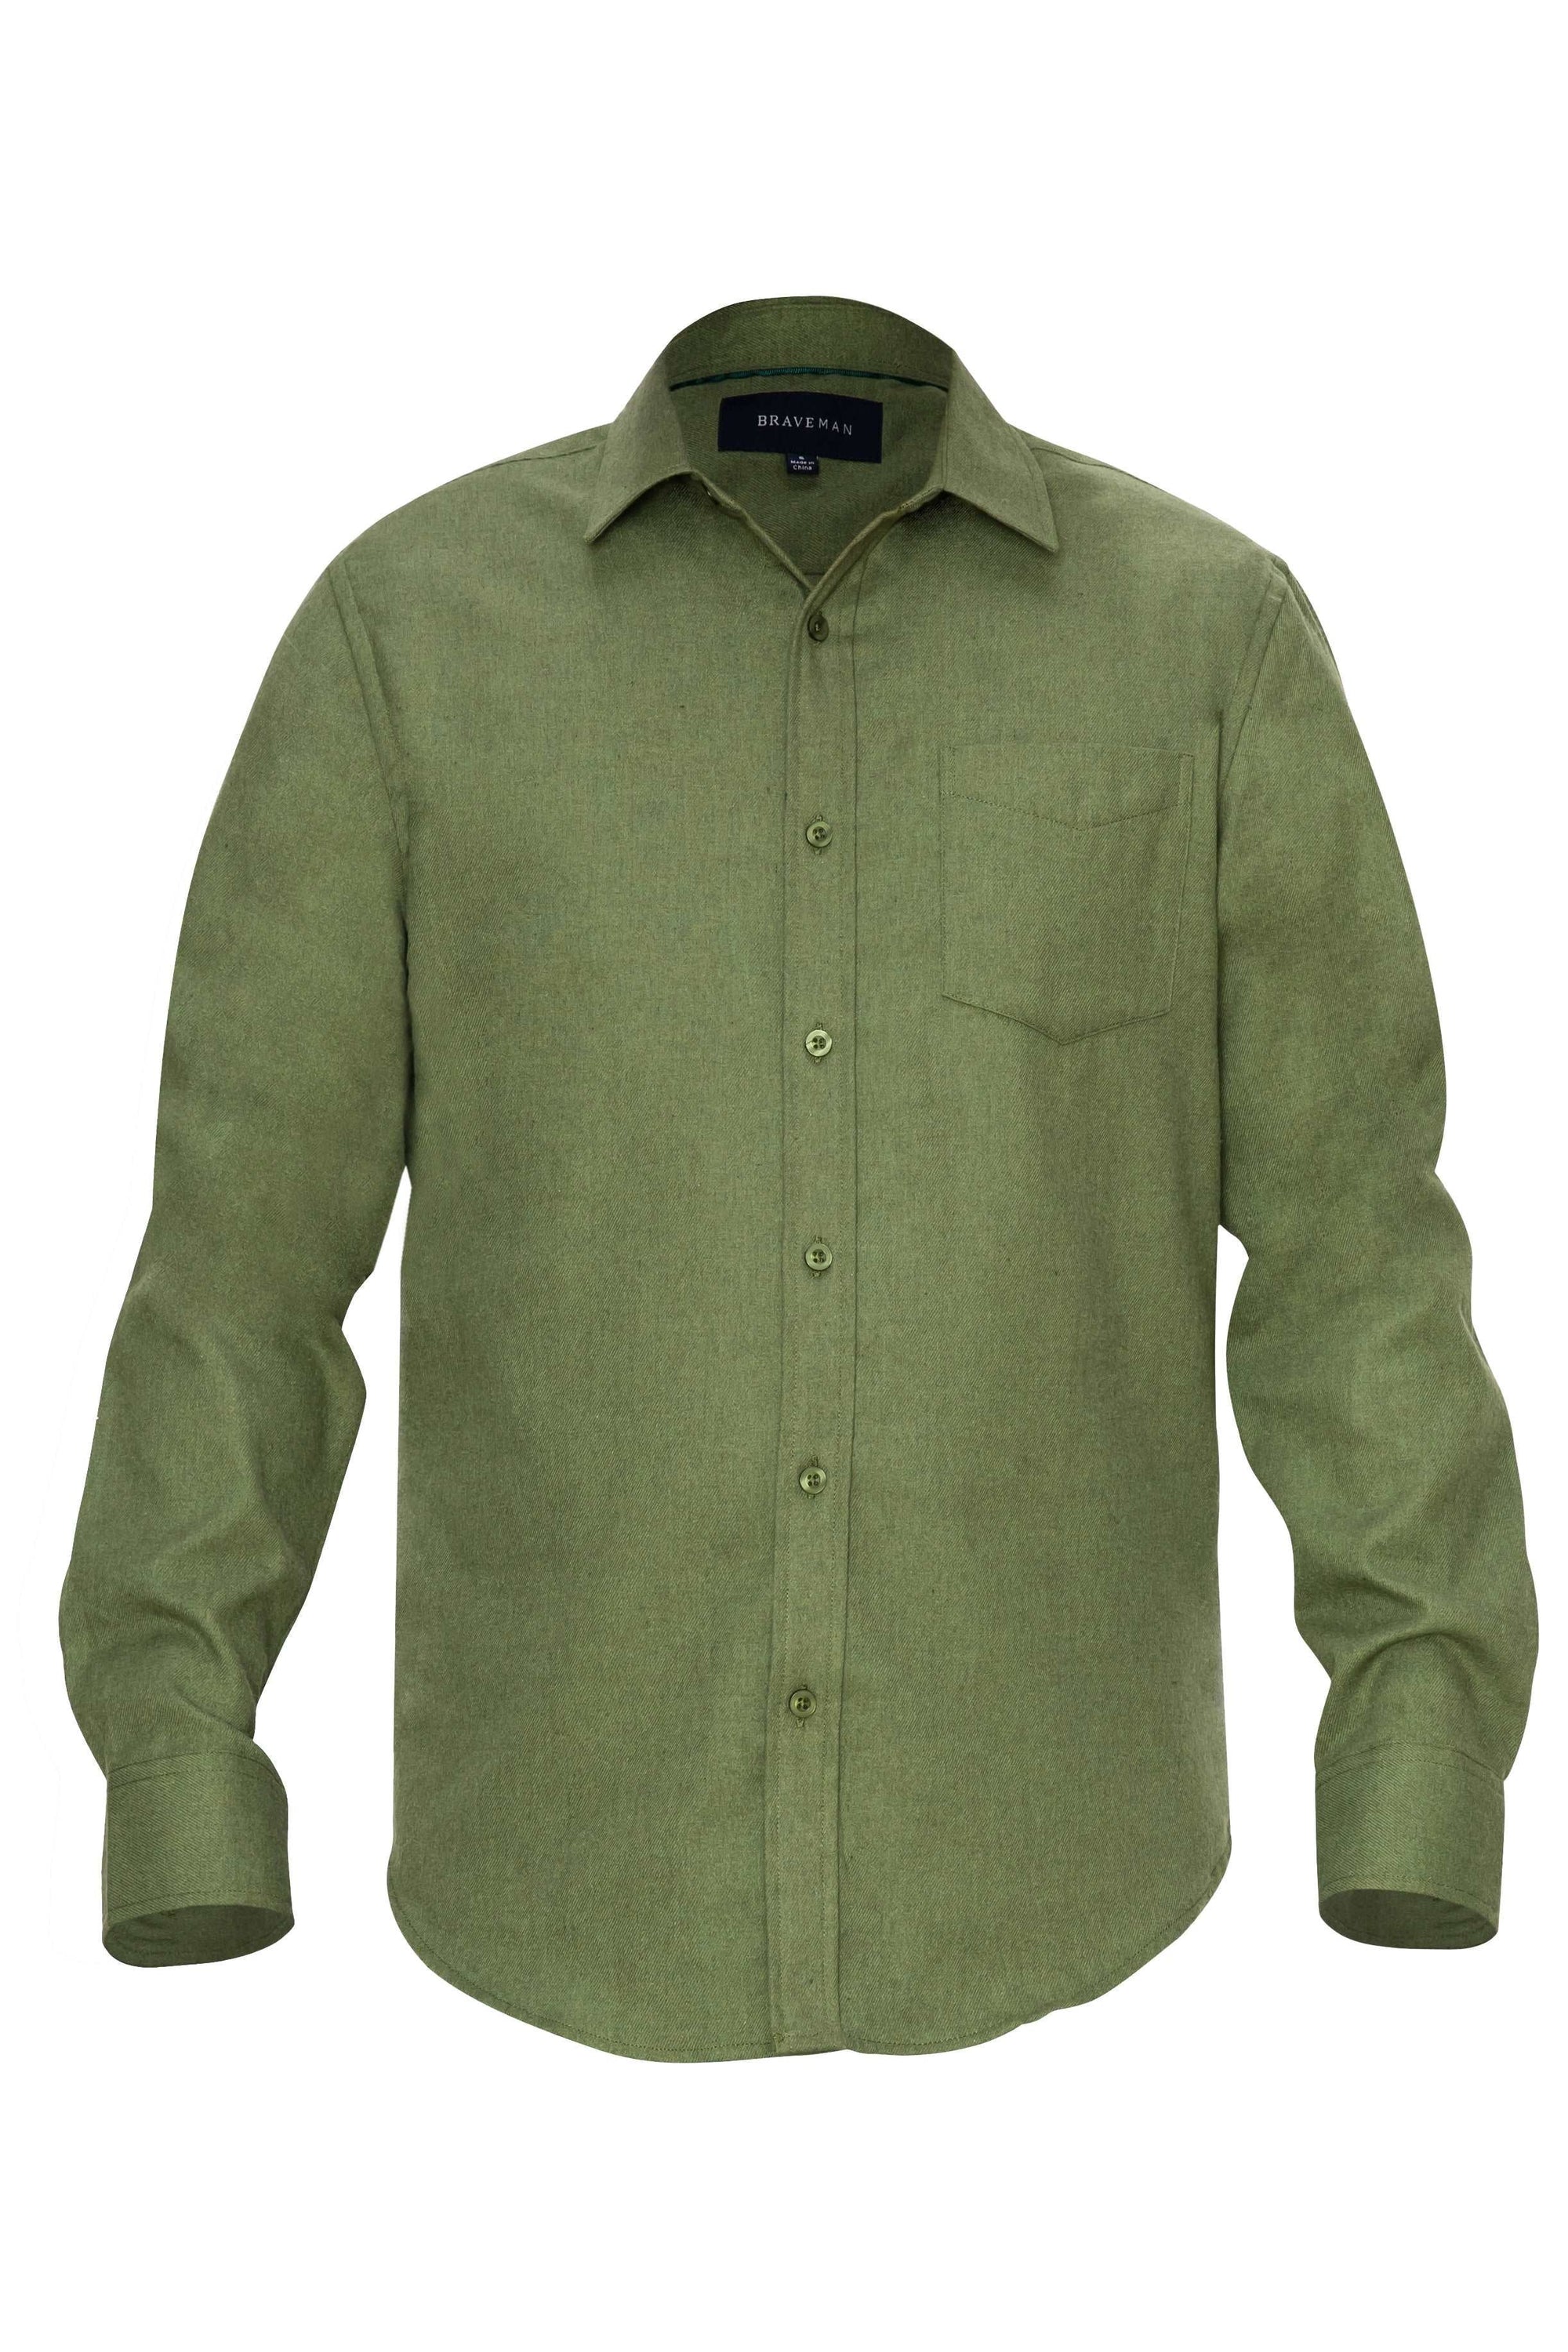 Braveman Men's Buffalo Plaid Button Down Flannel Shirt